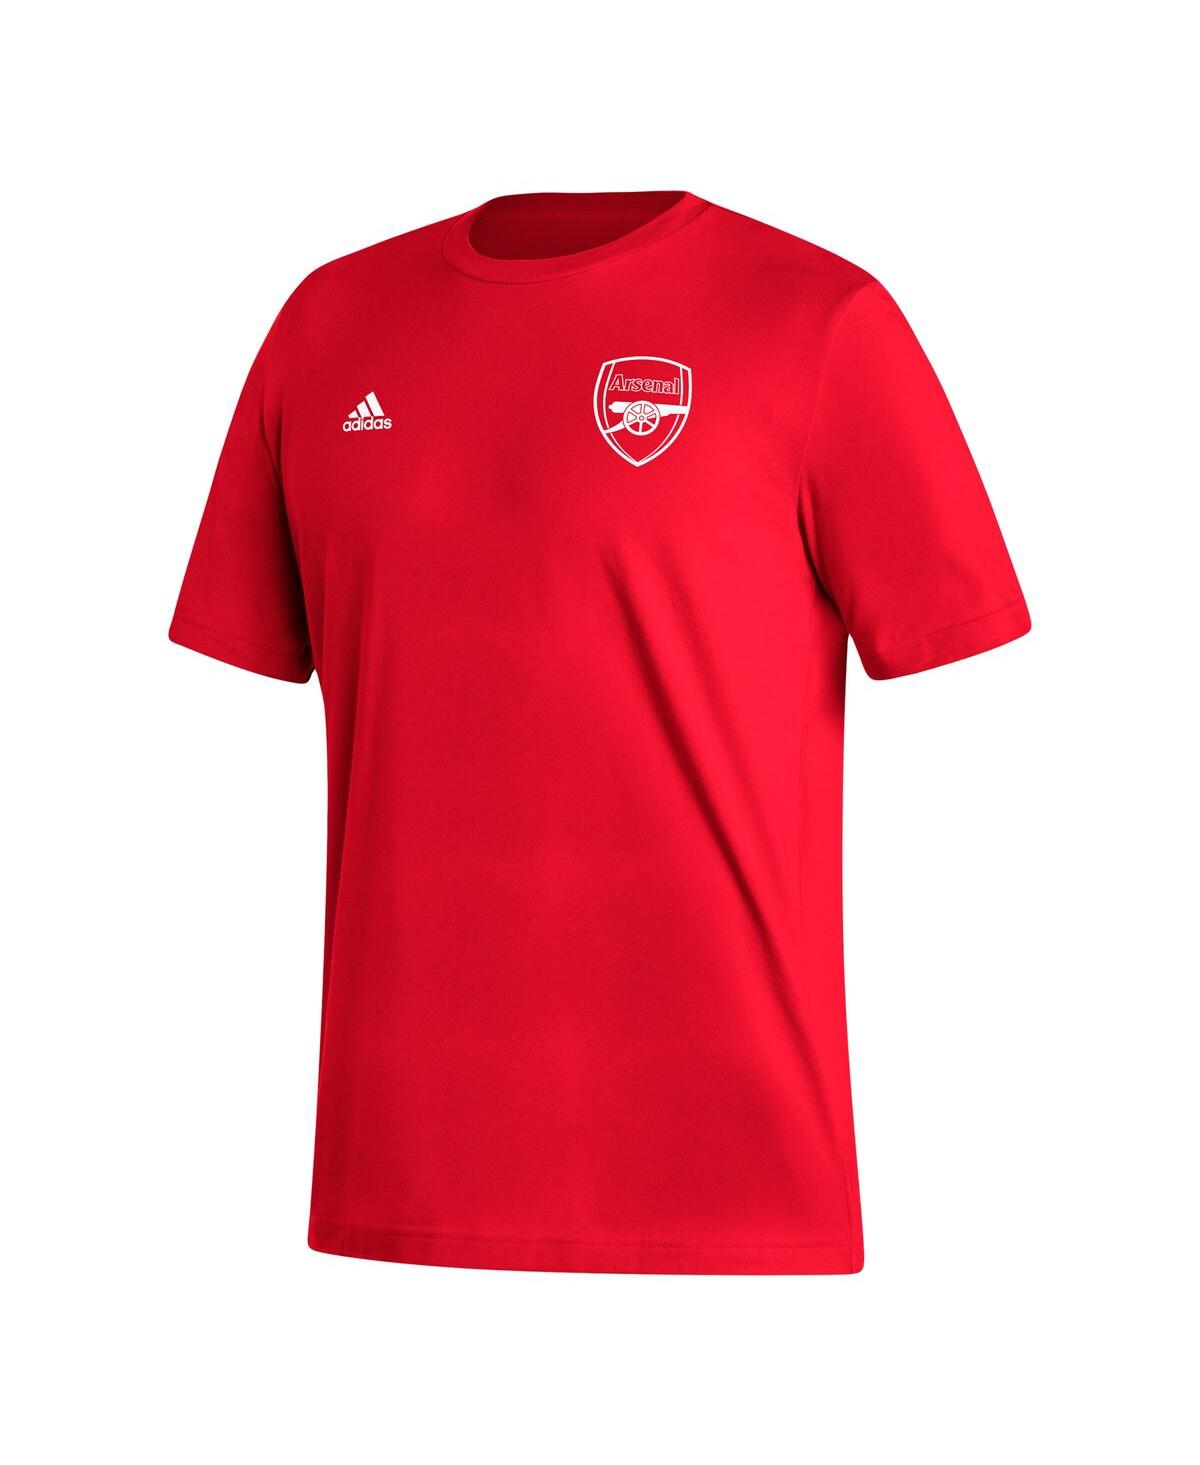 Shop Adidas Originals Men's Adidas Red Arsenal Crest T-shirt